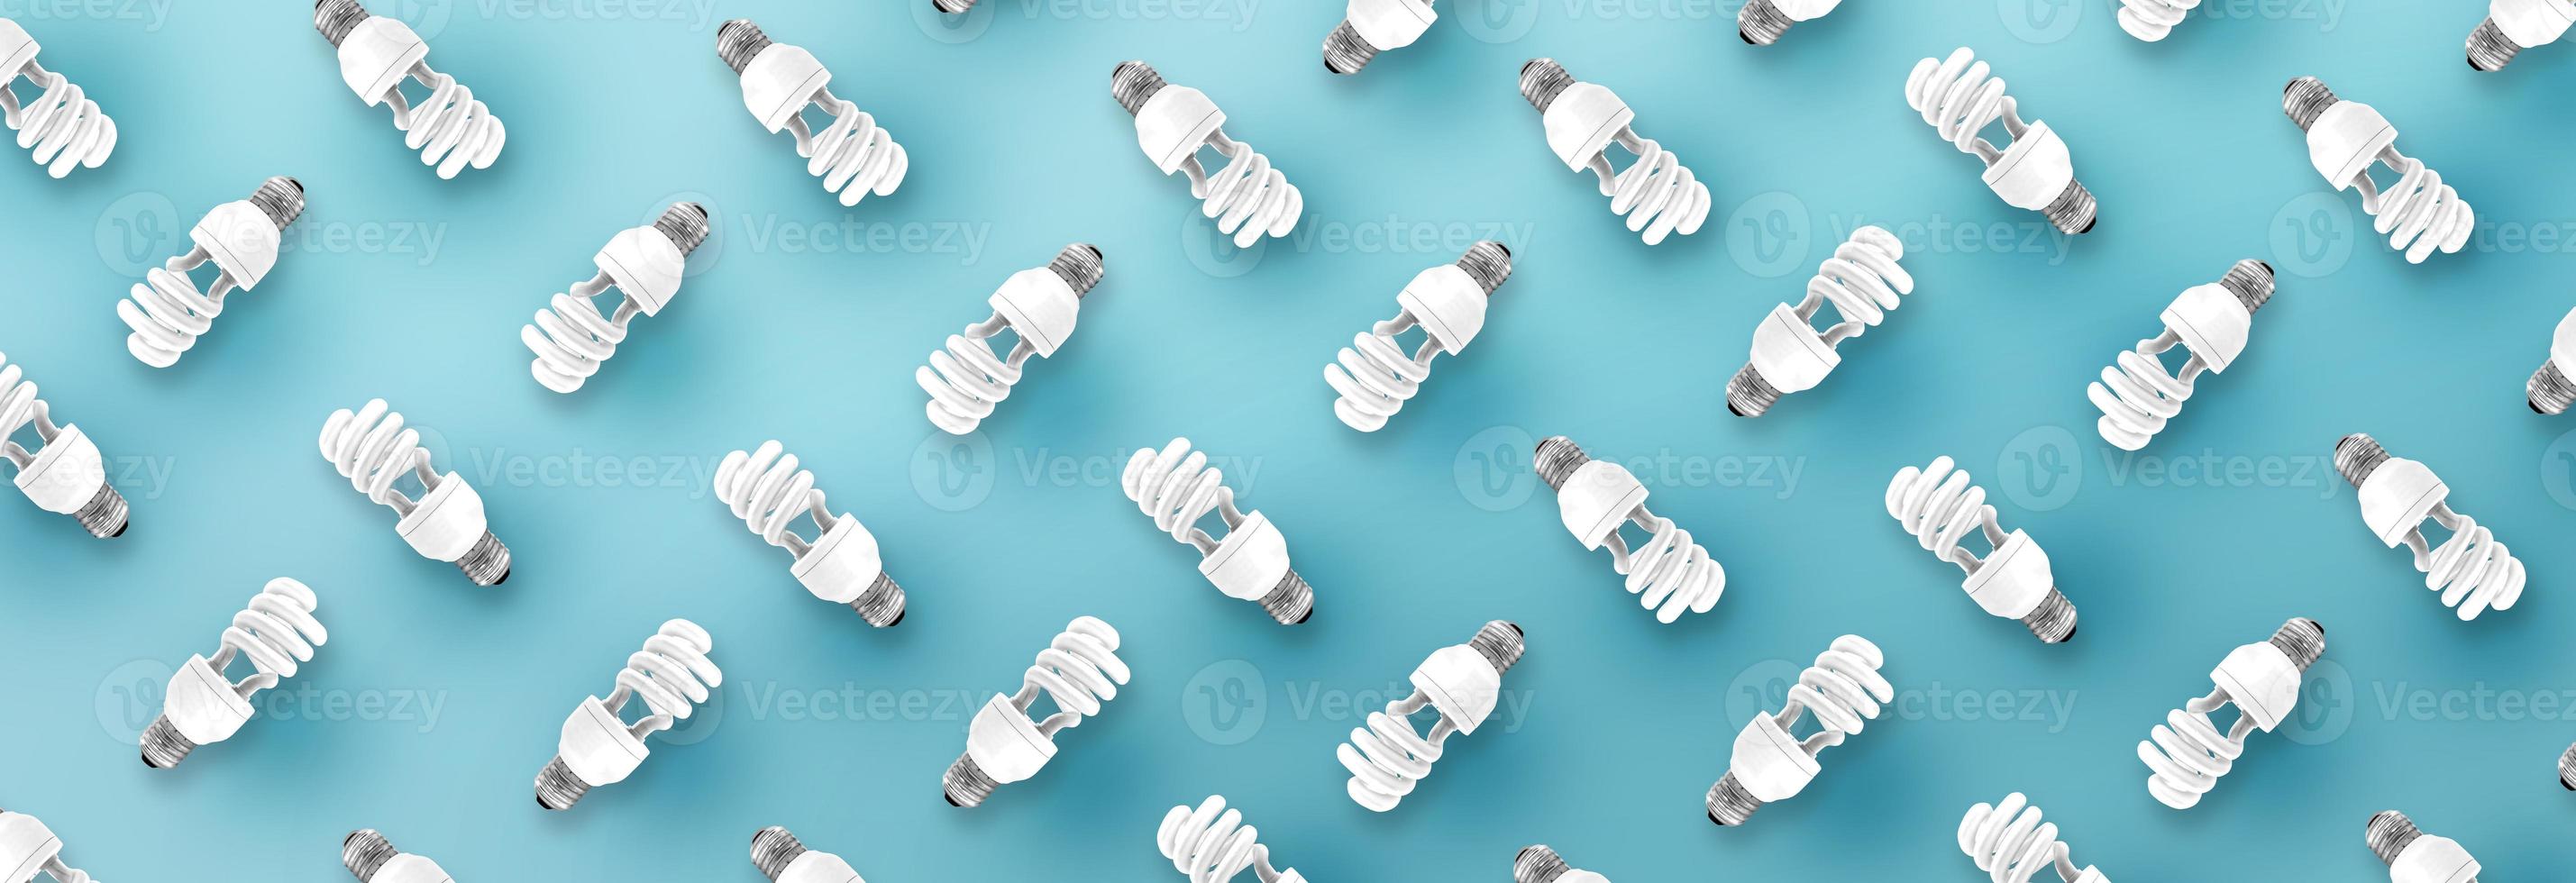 Fluorescent Light Bulb pattern on blue background. photo